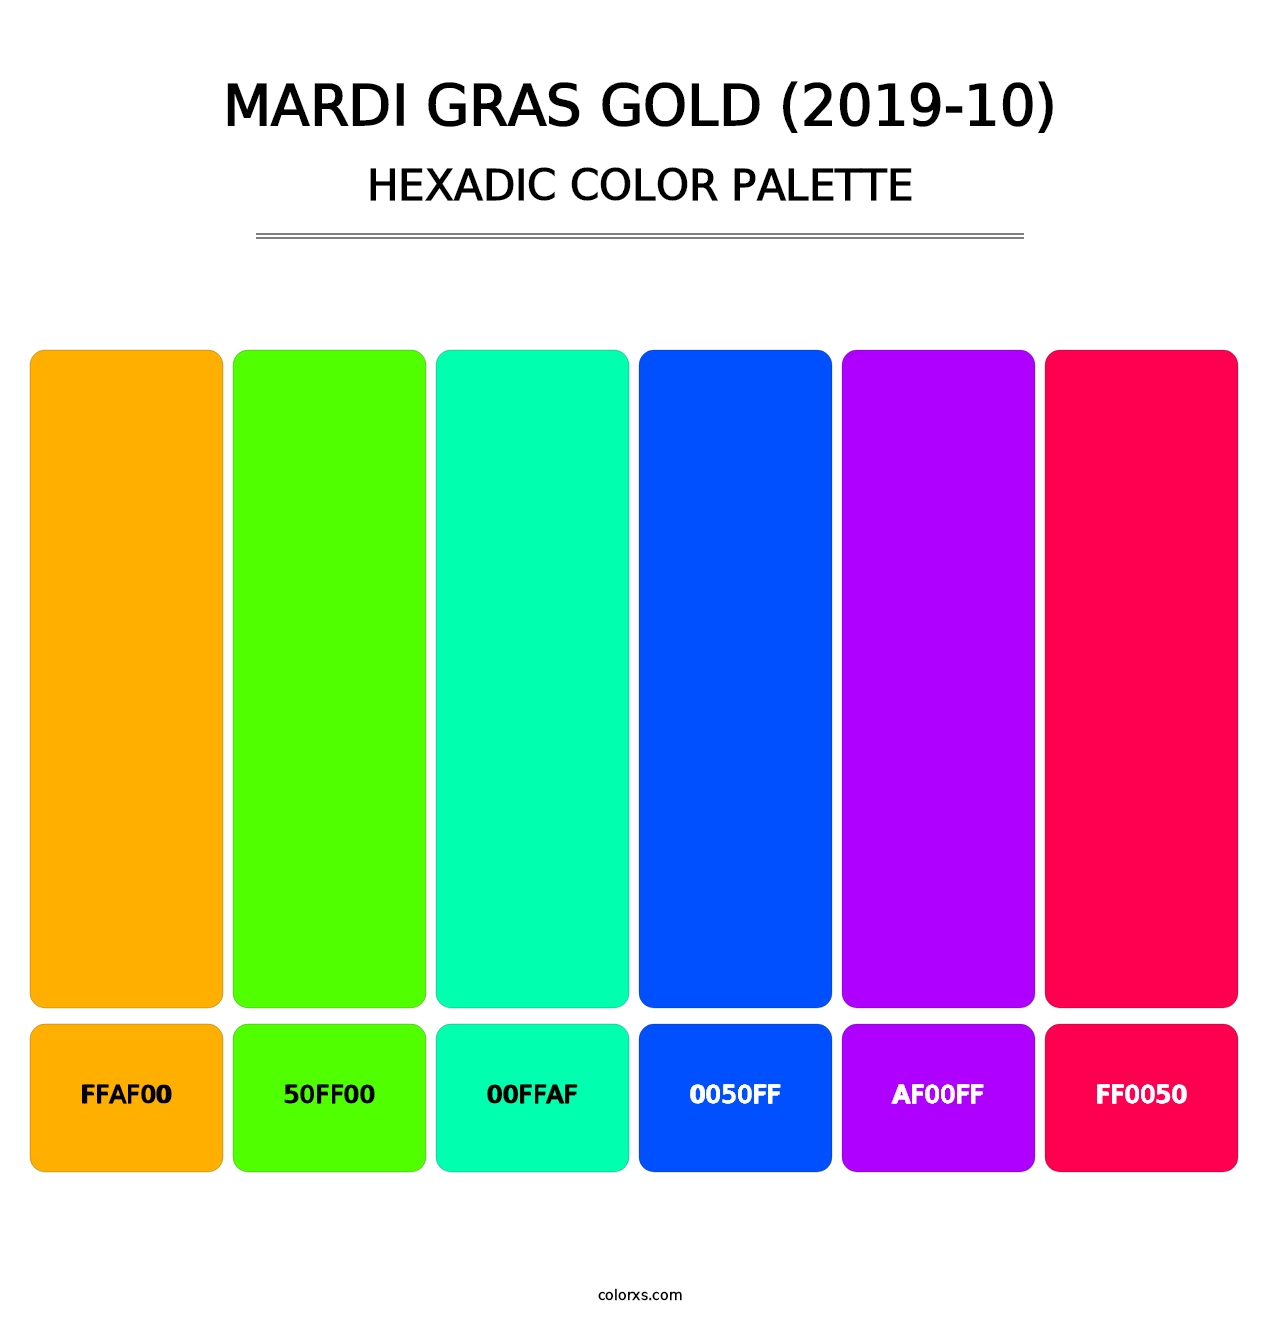 Mardi Gras Gold (2019-10) - Hexadic Color Palette